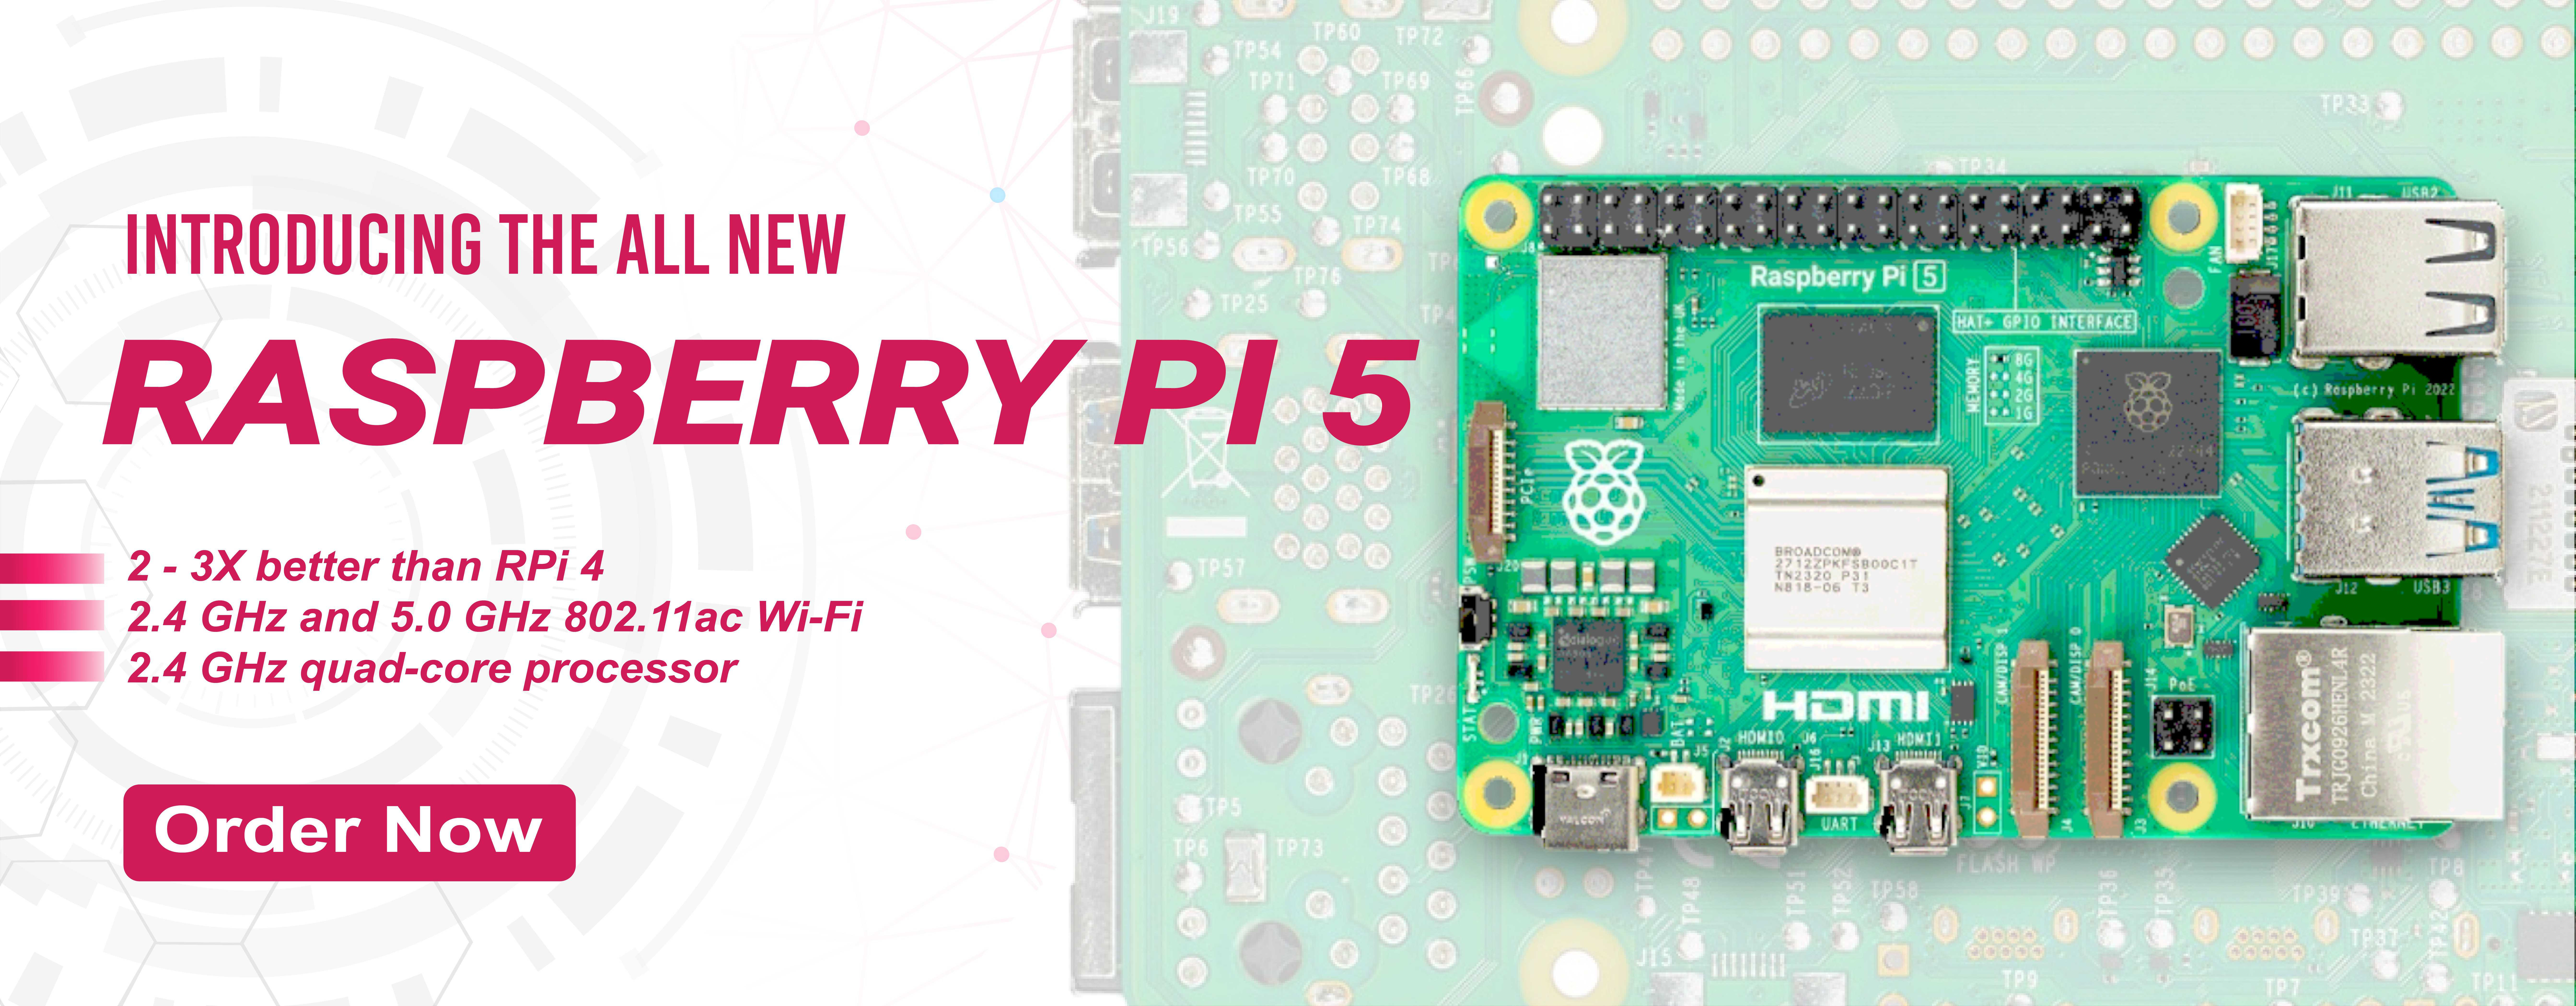 Raspberry Pi 4 B 4G Computer Board - RobotShop